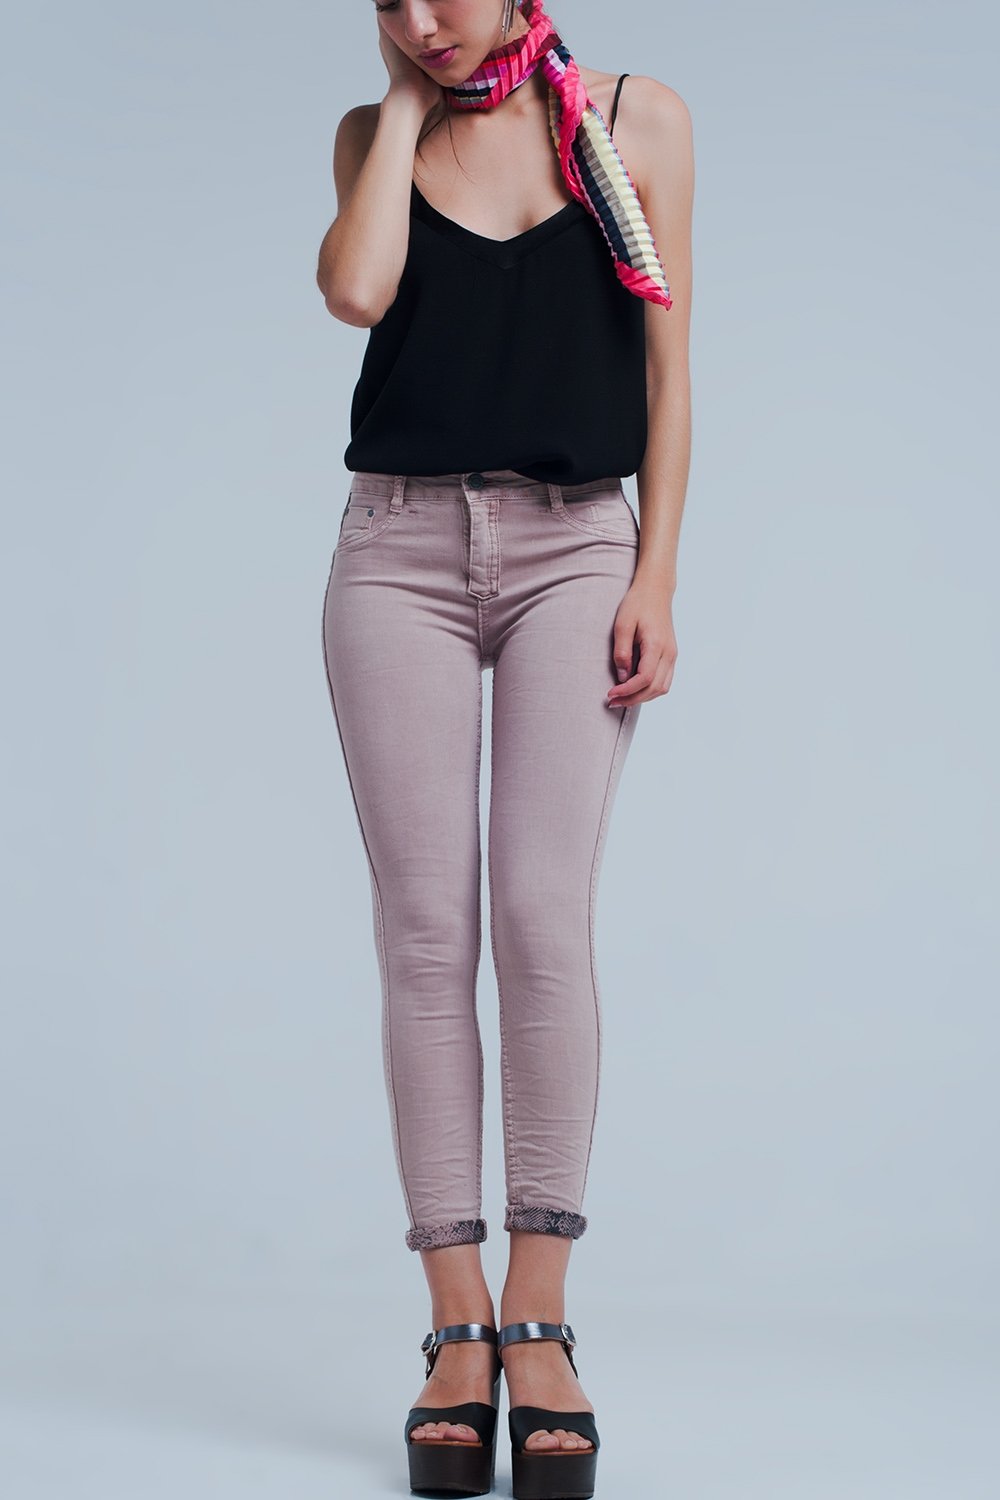 Reversible Animal Print Pink Jeans - LOLA LUXE